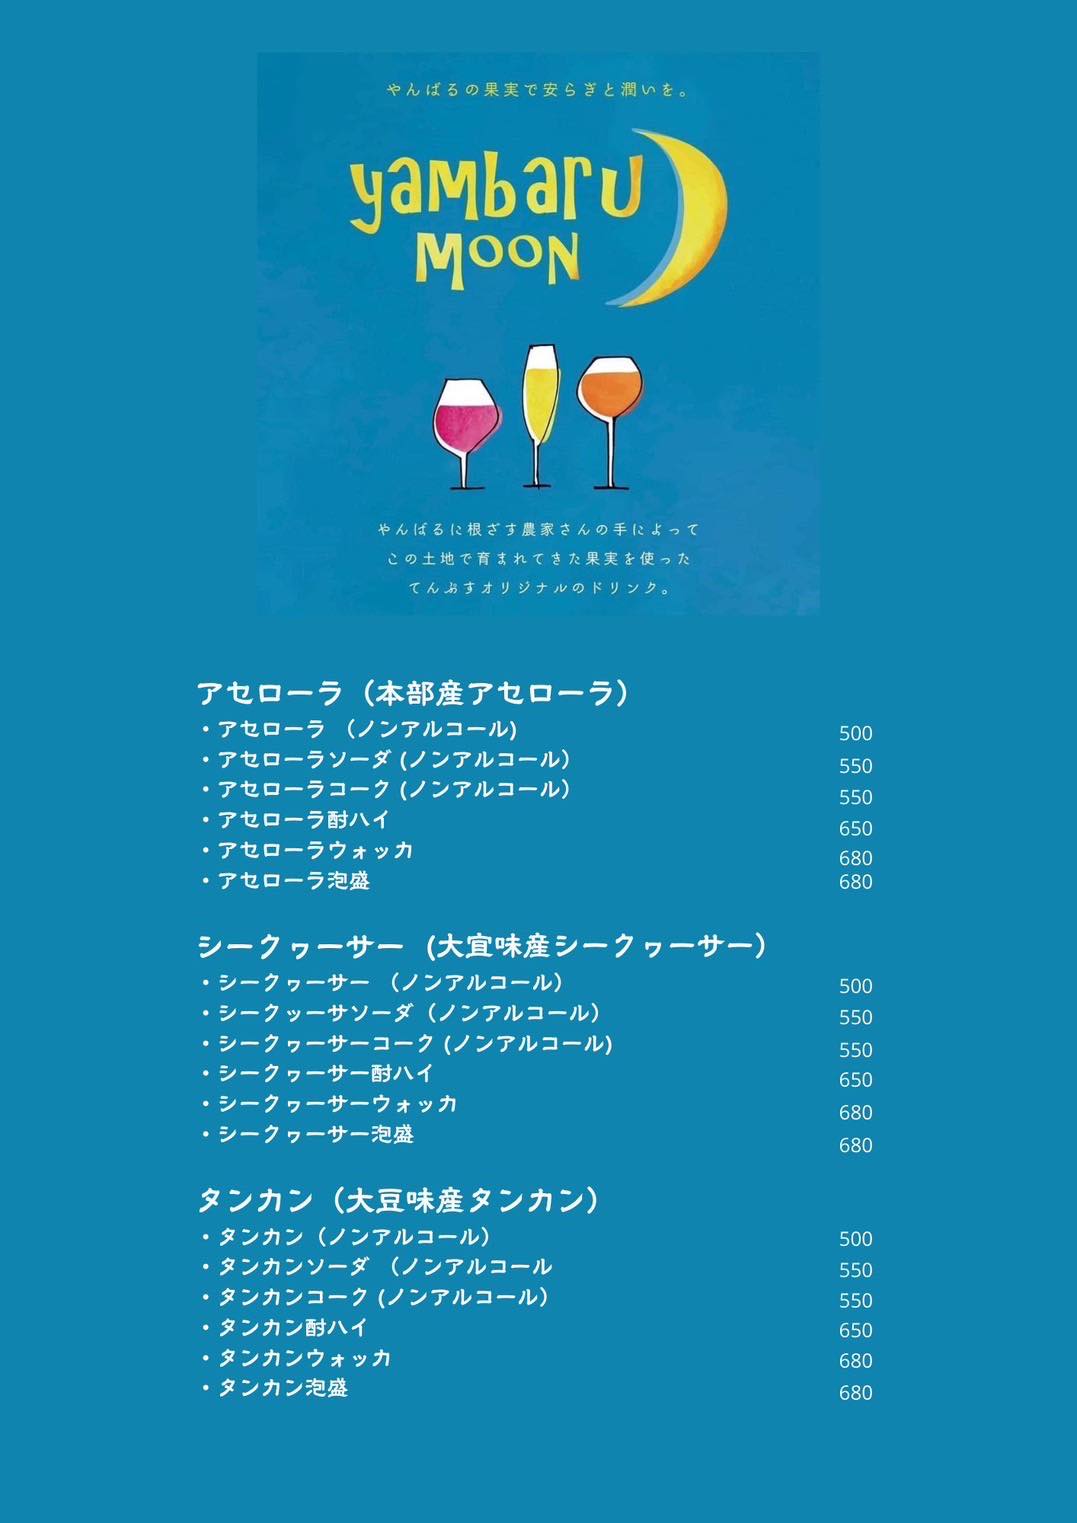 yambaru moon